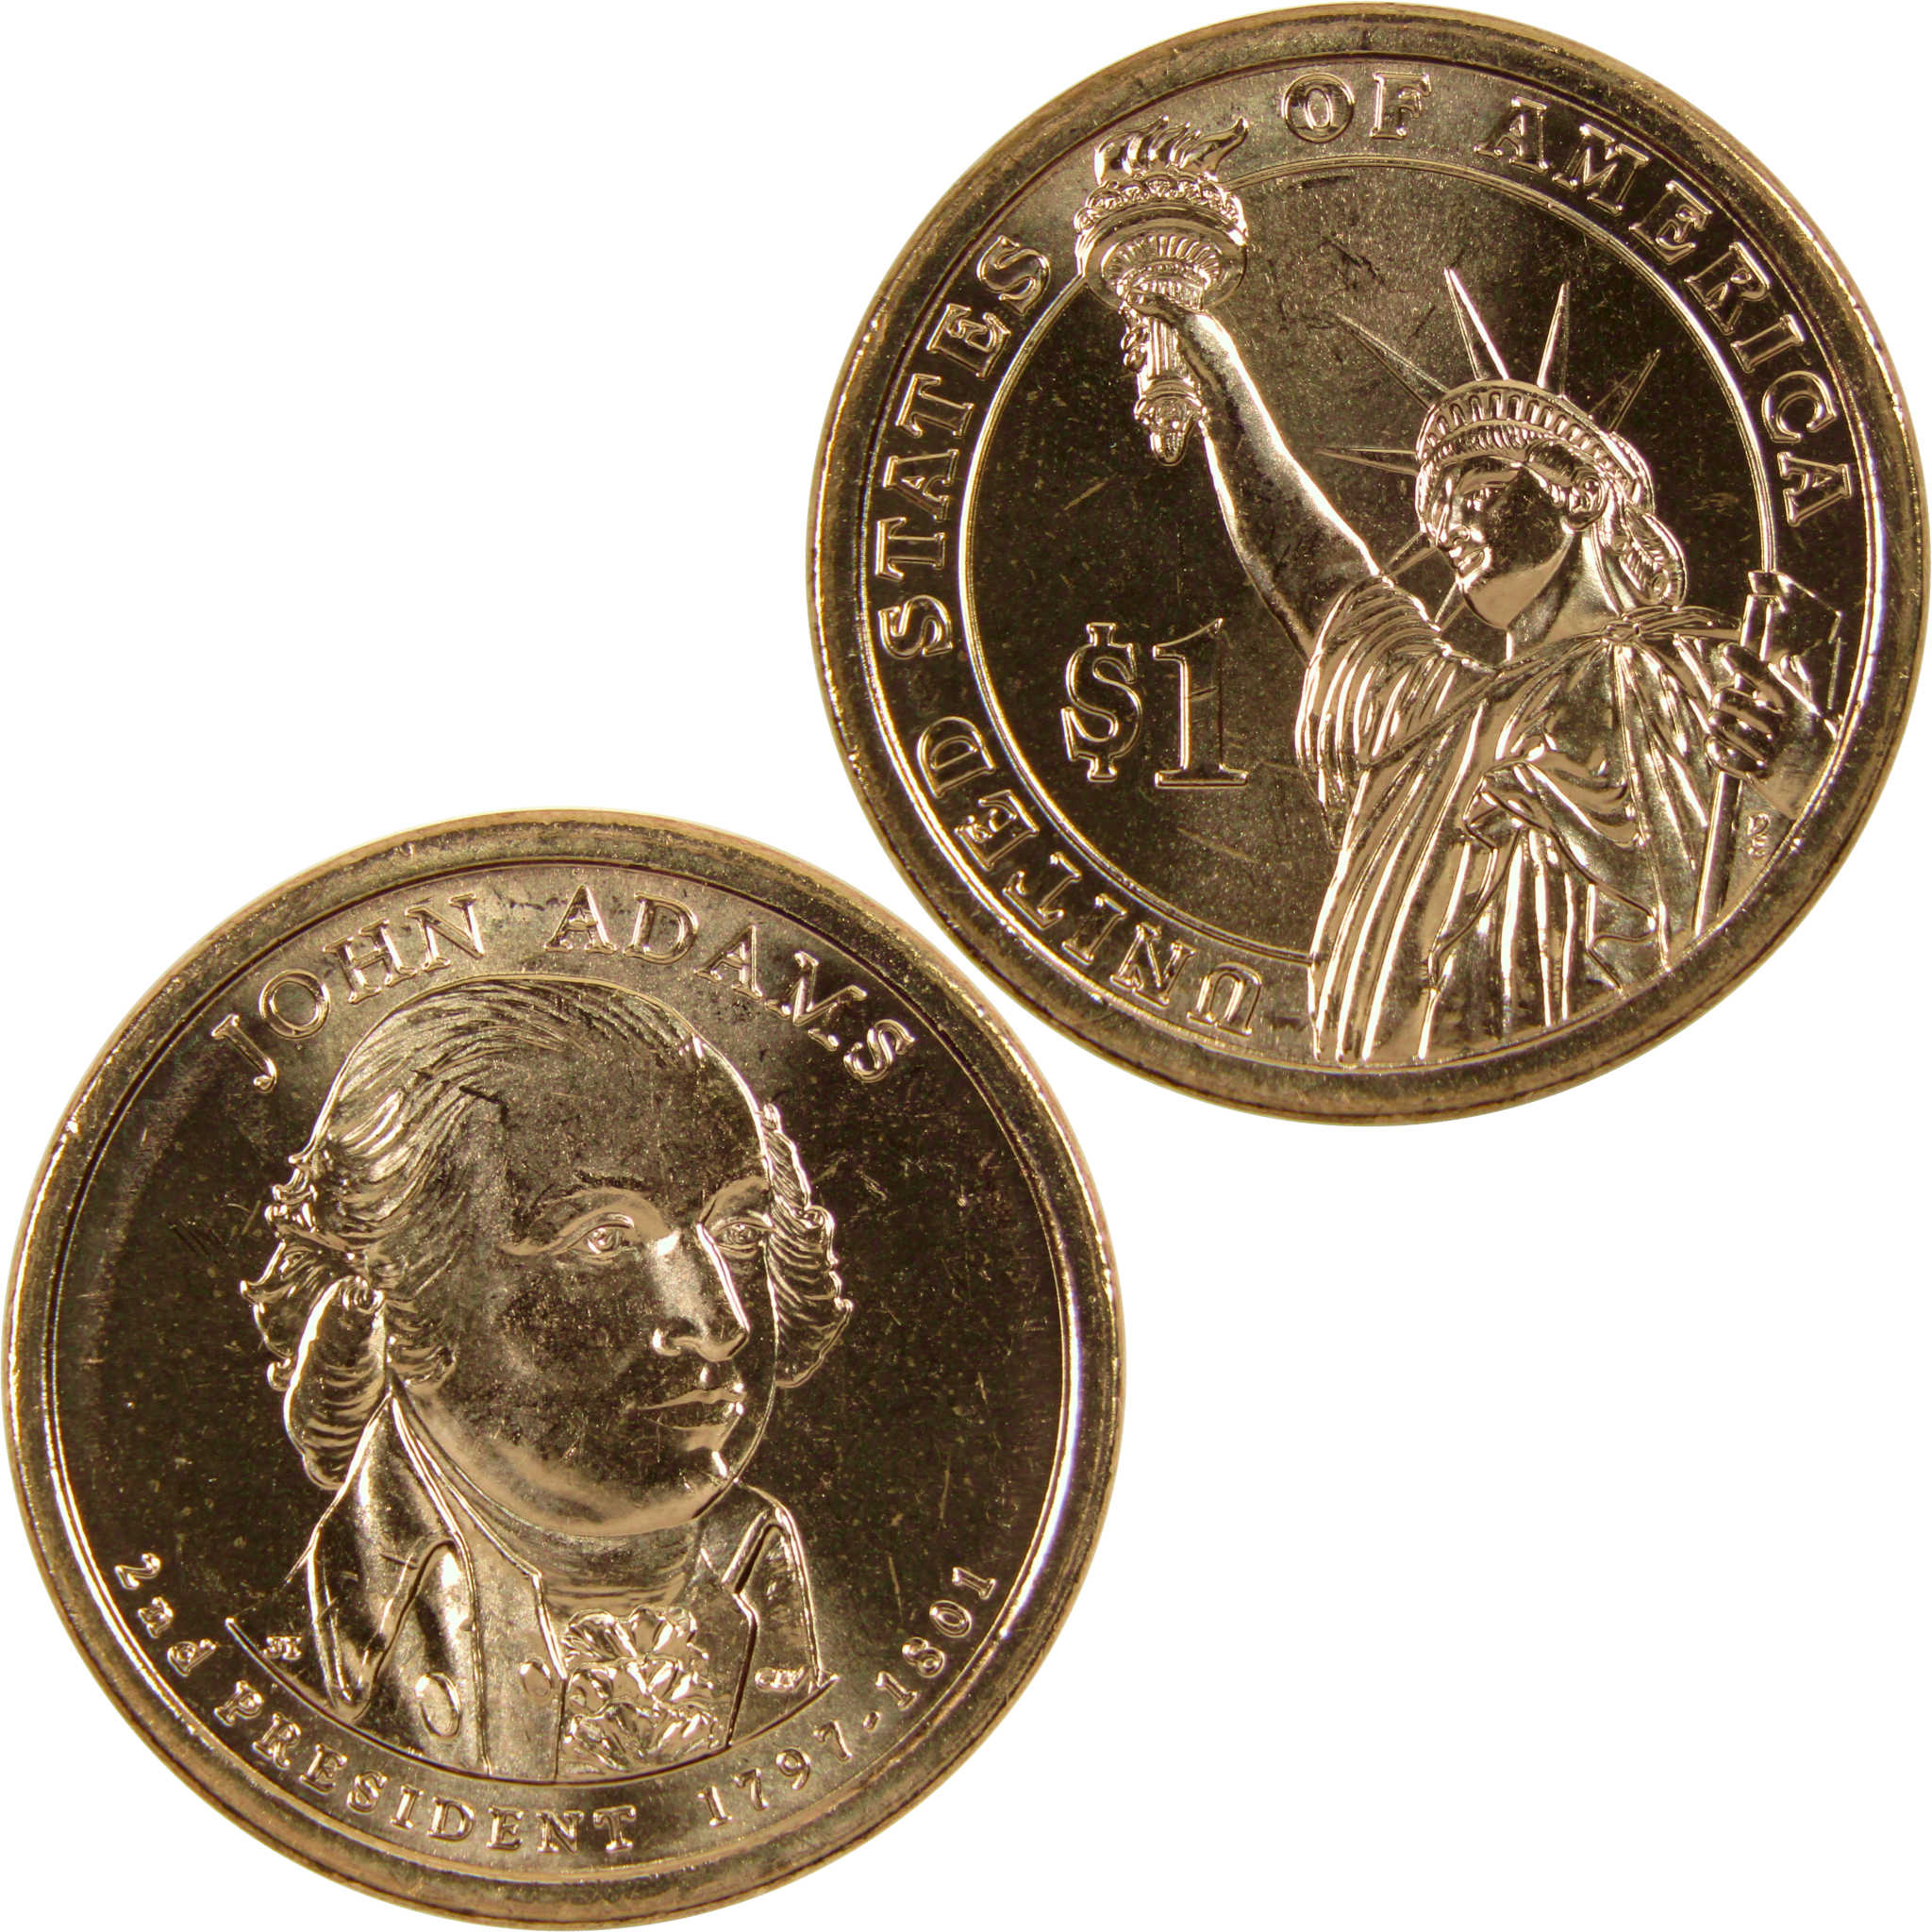 2007 D John Adams Presidential Dollar BU Uncirculated $1 Coin